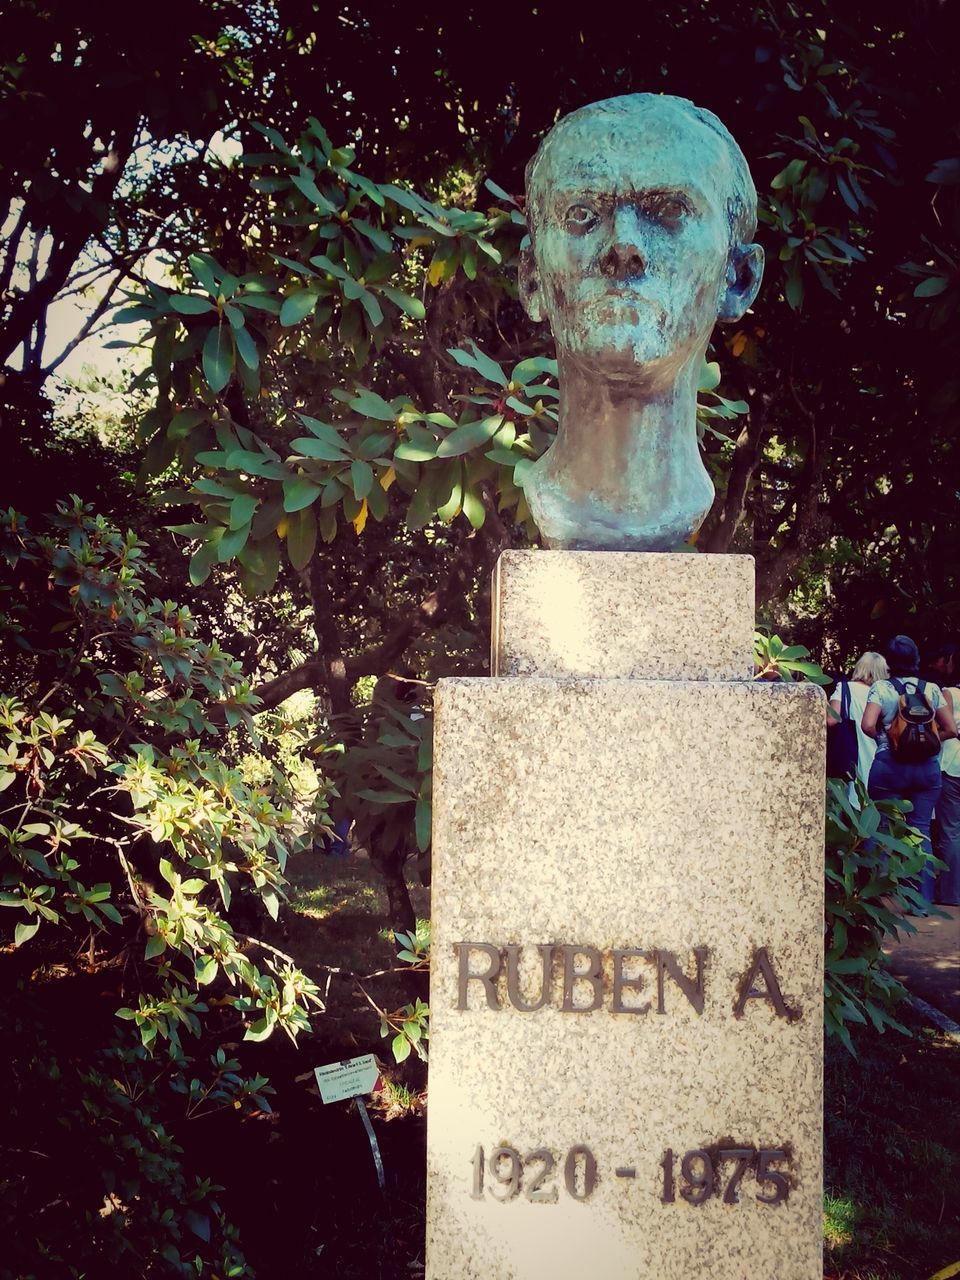 Ruben a aquino bust against trees at jardim botanico